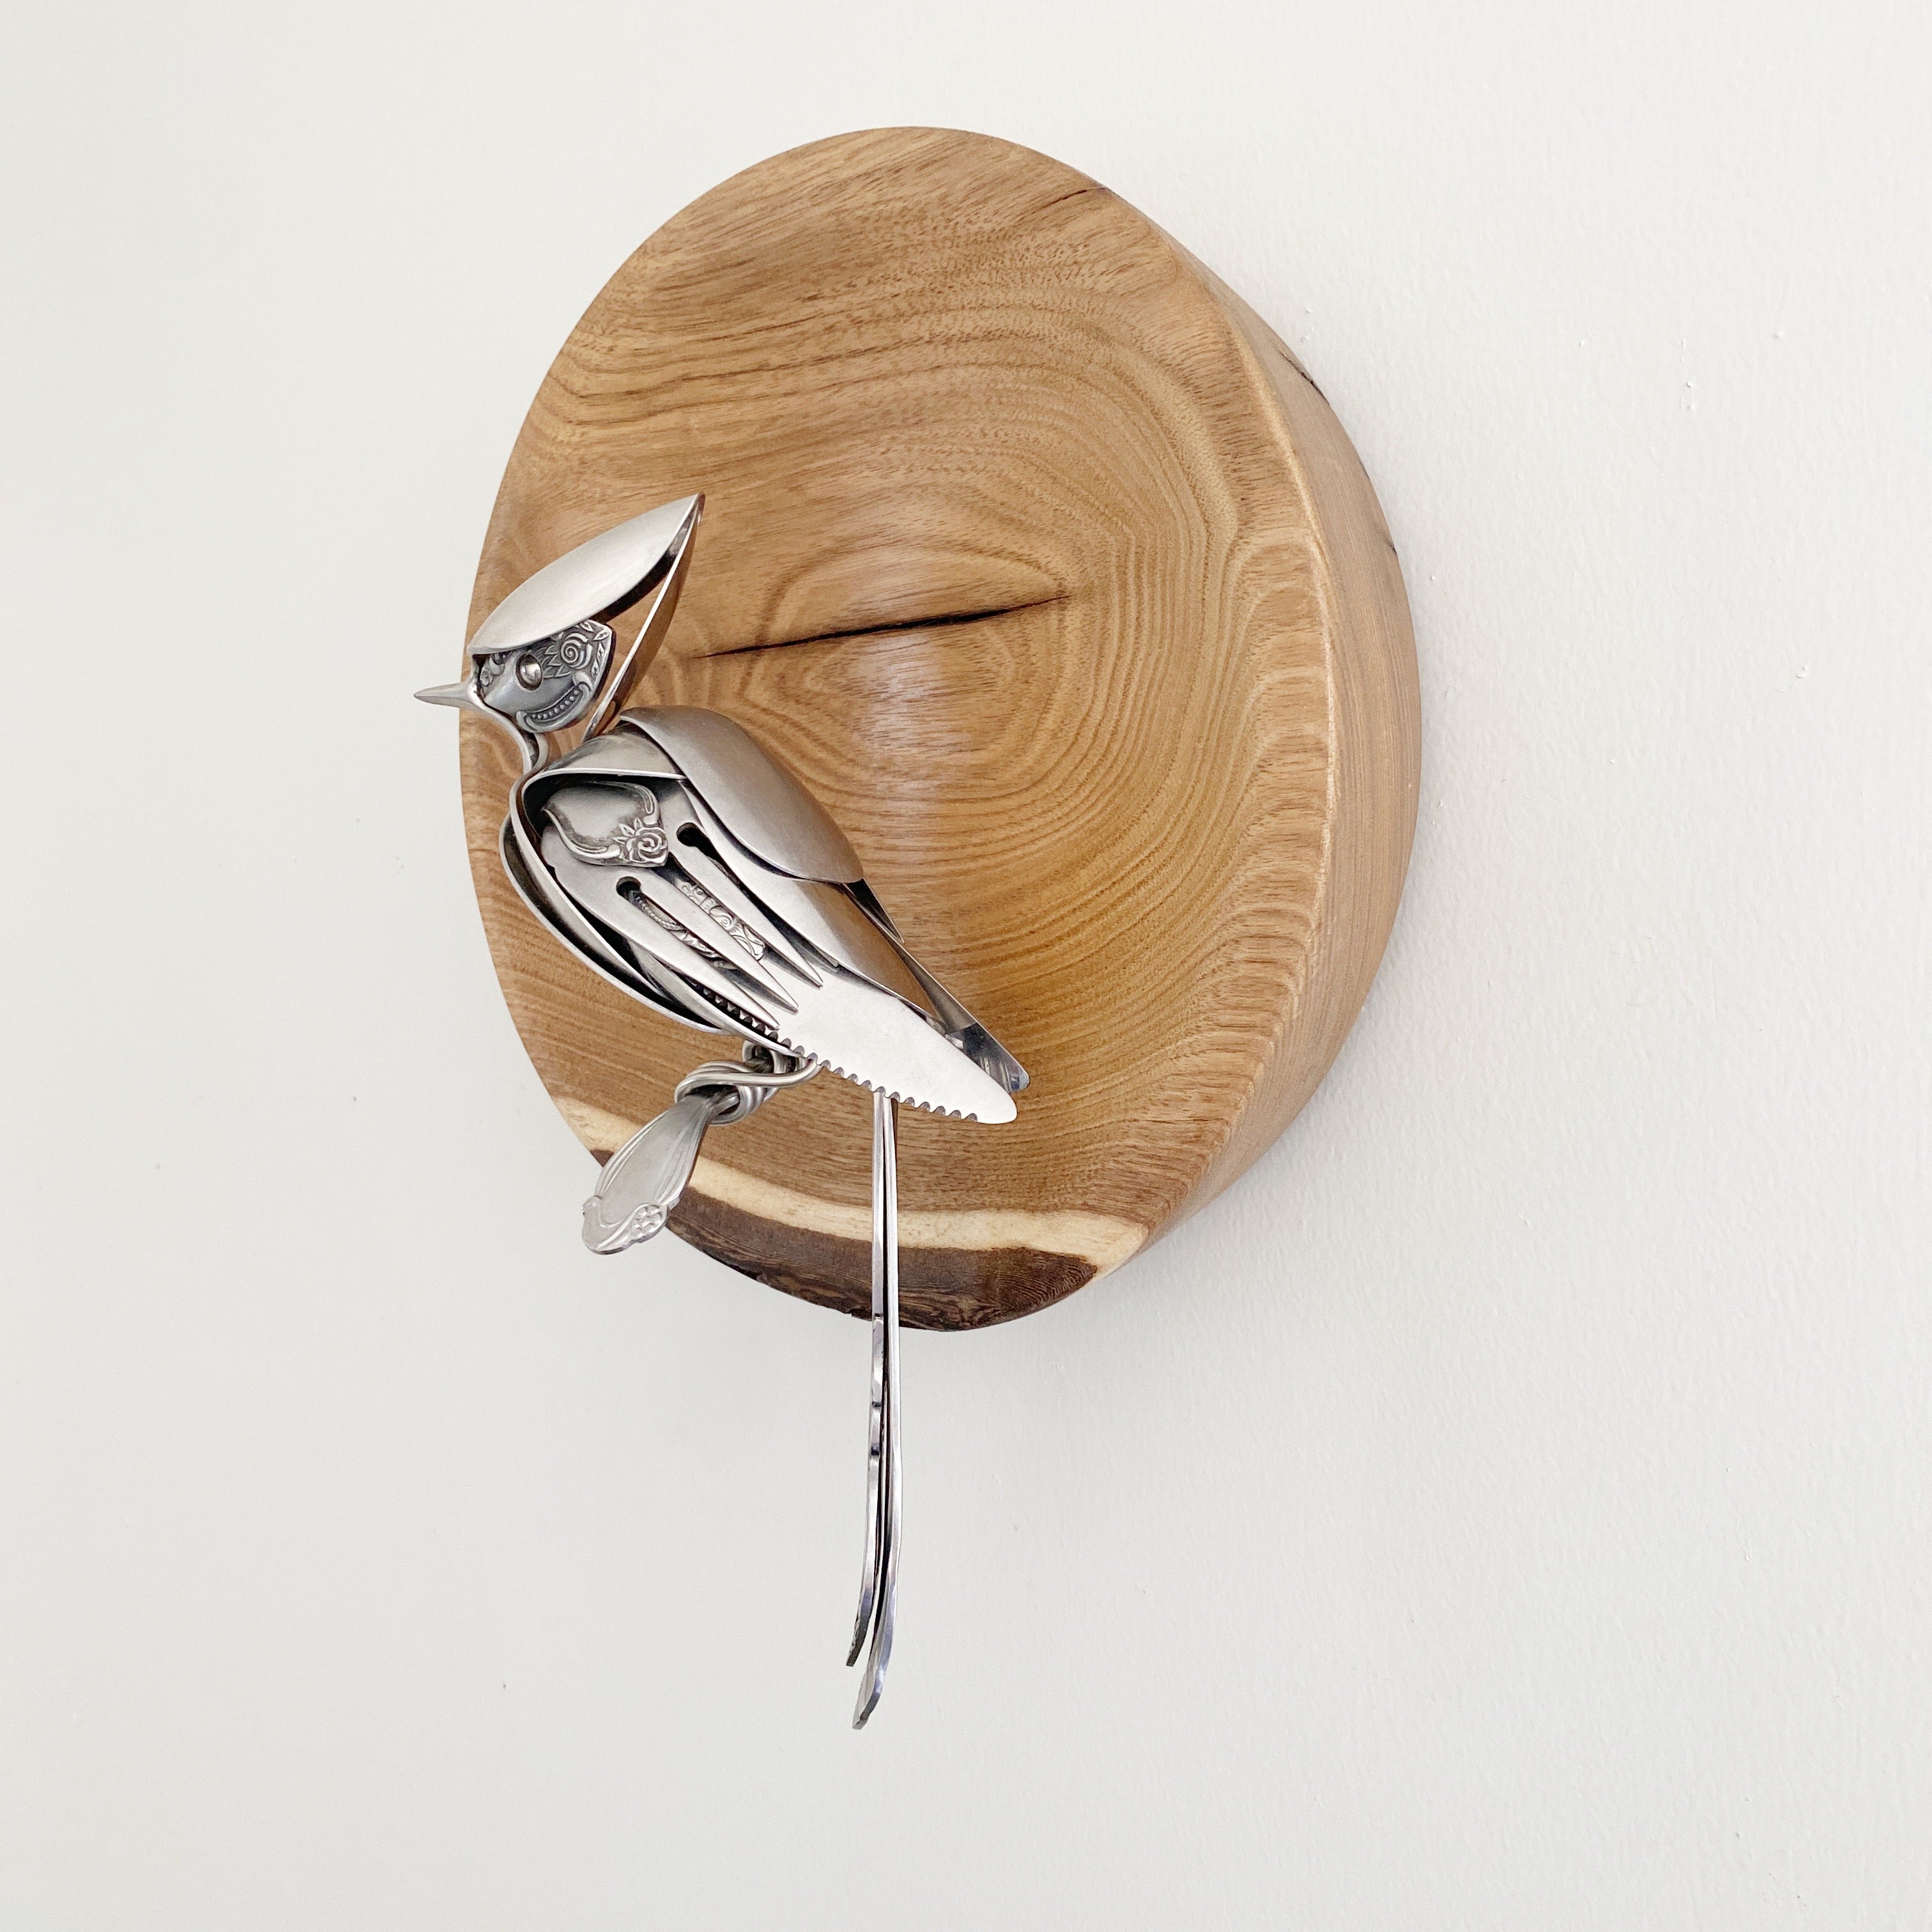 "Carlos" - Upcycled Metal Bird Sculpture